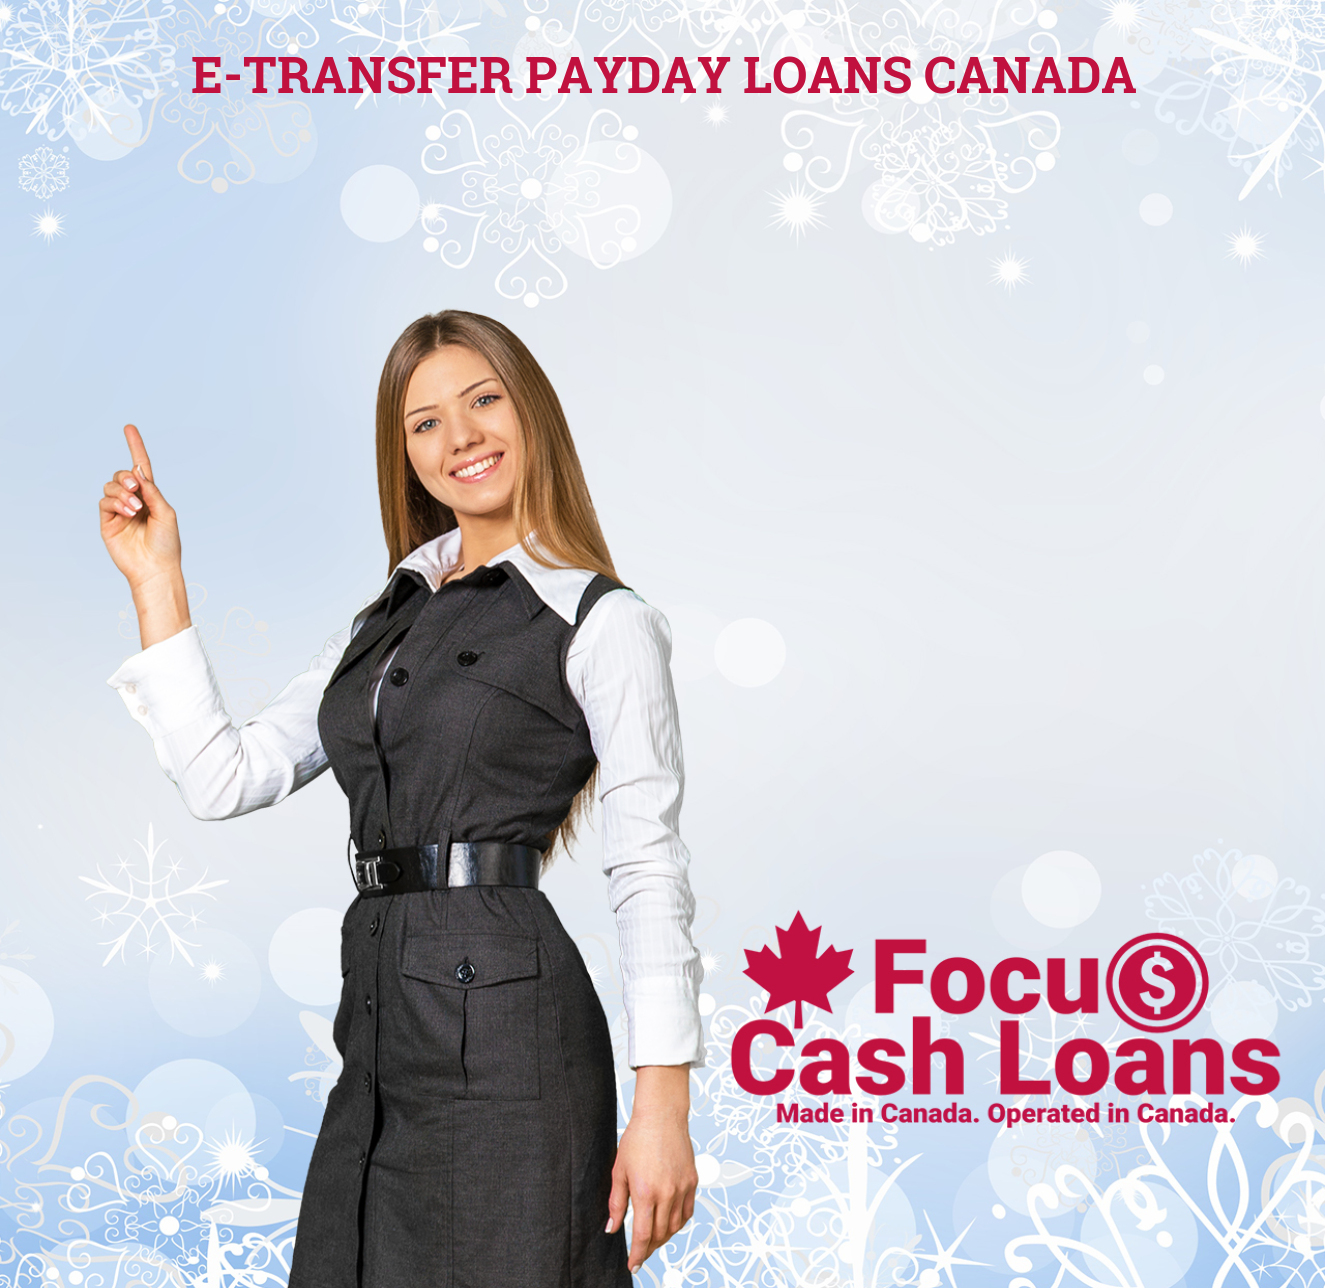 e-transfer payday loans canada 24/7